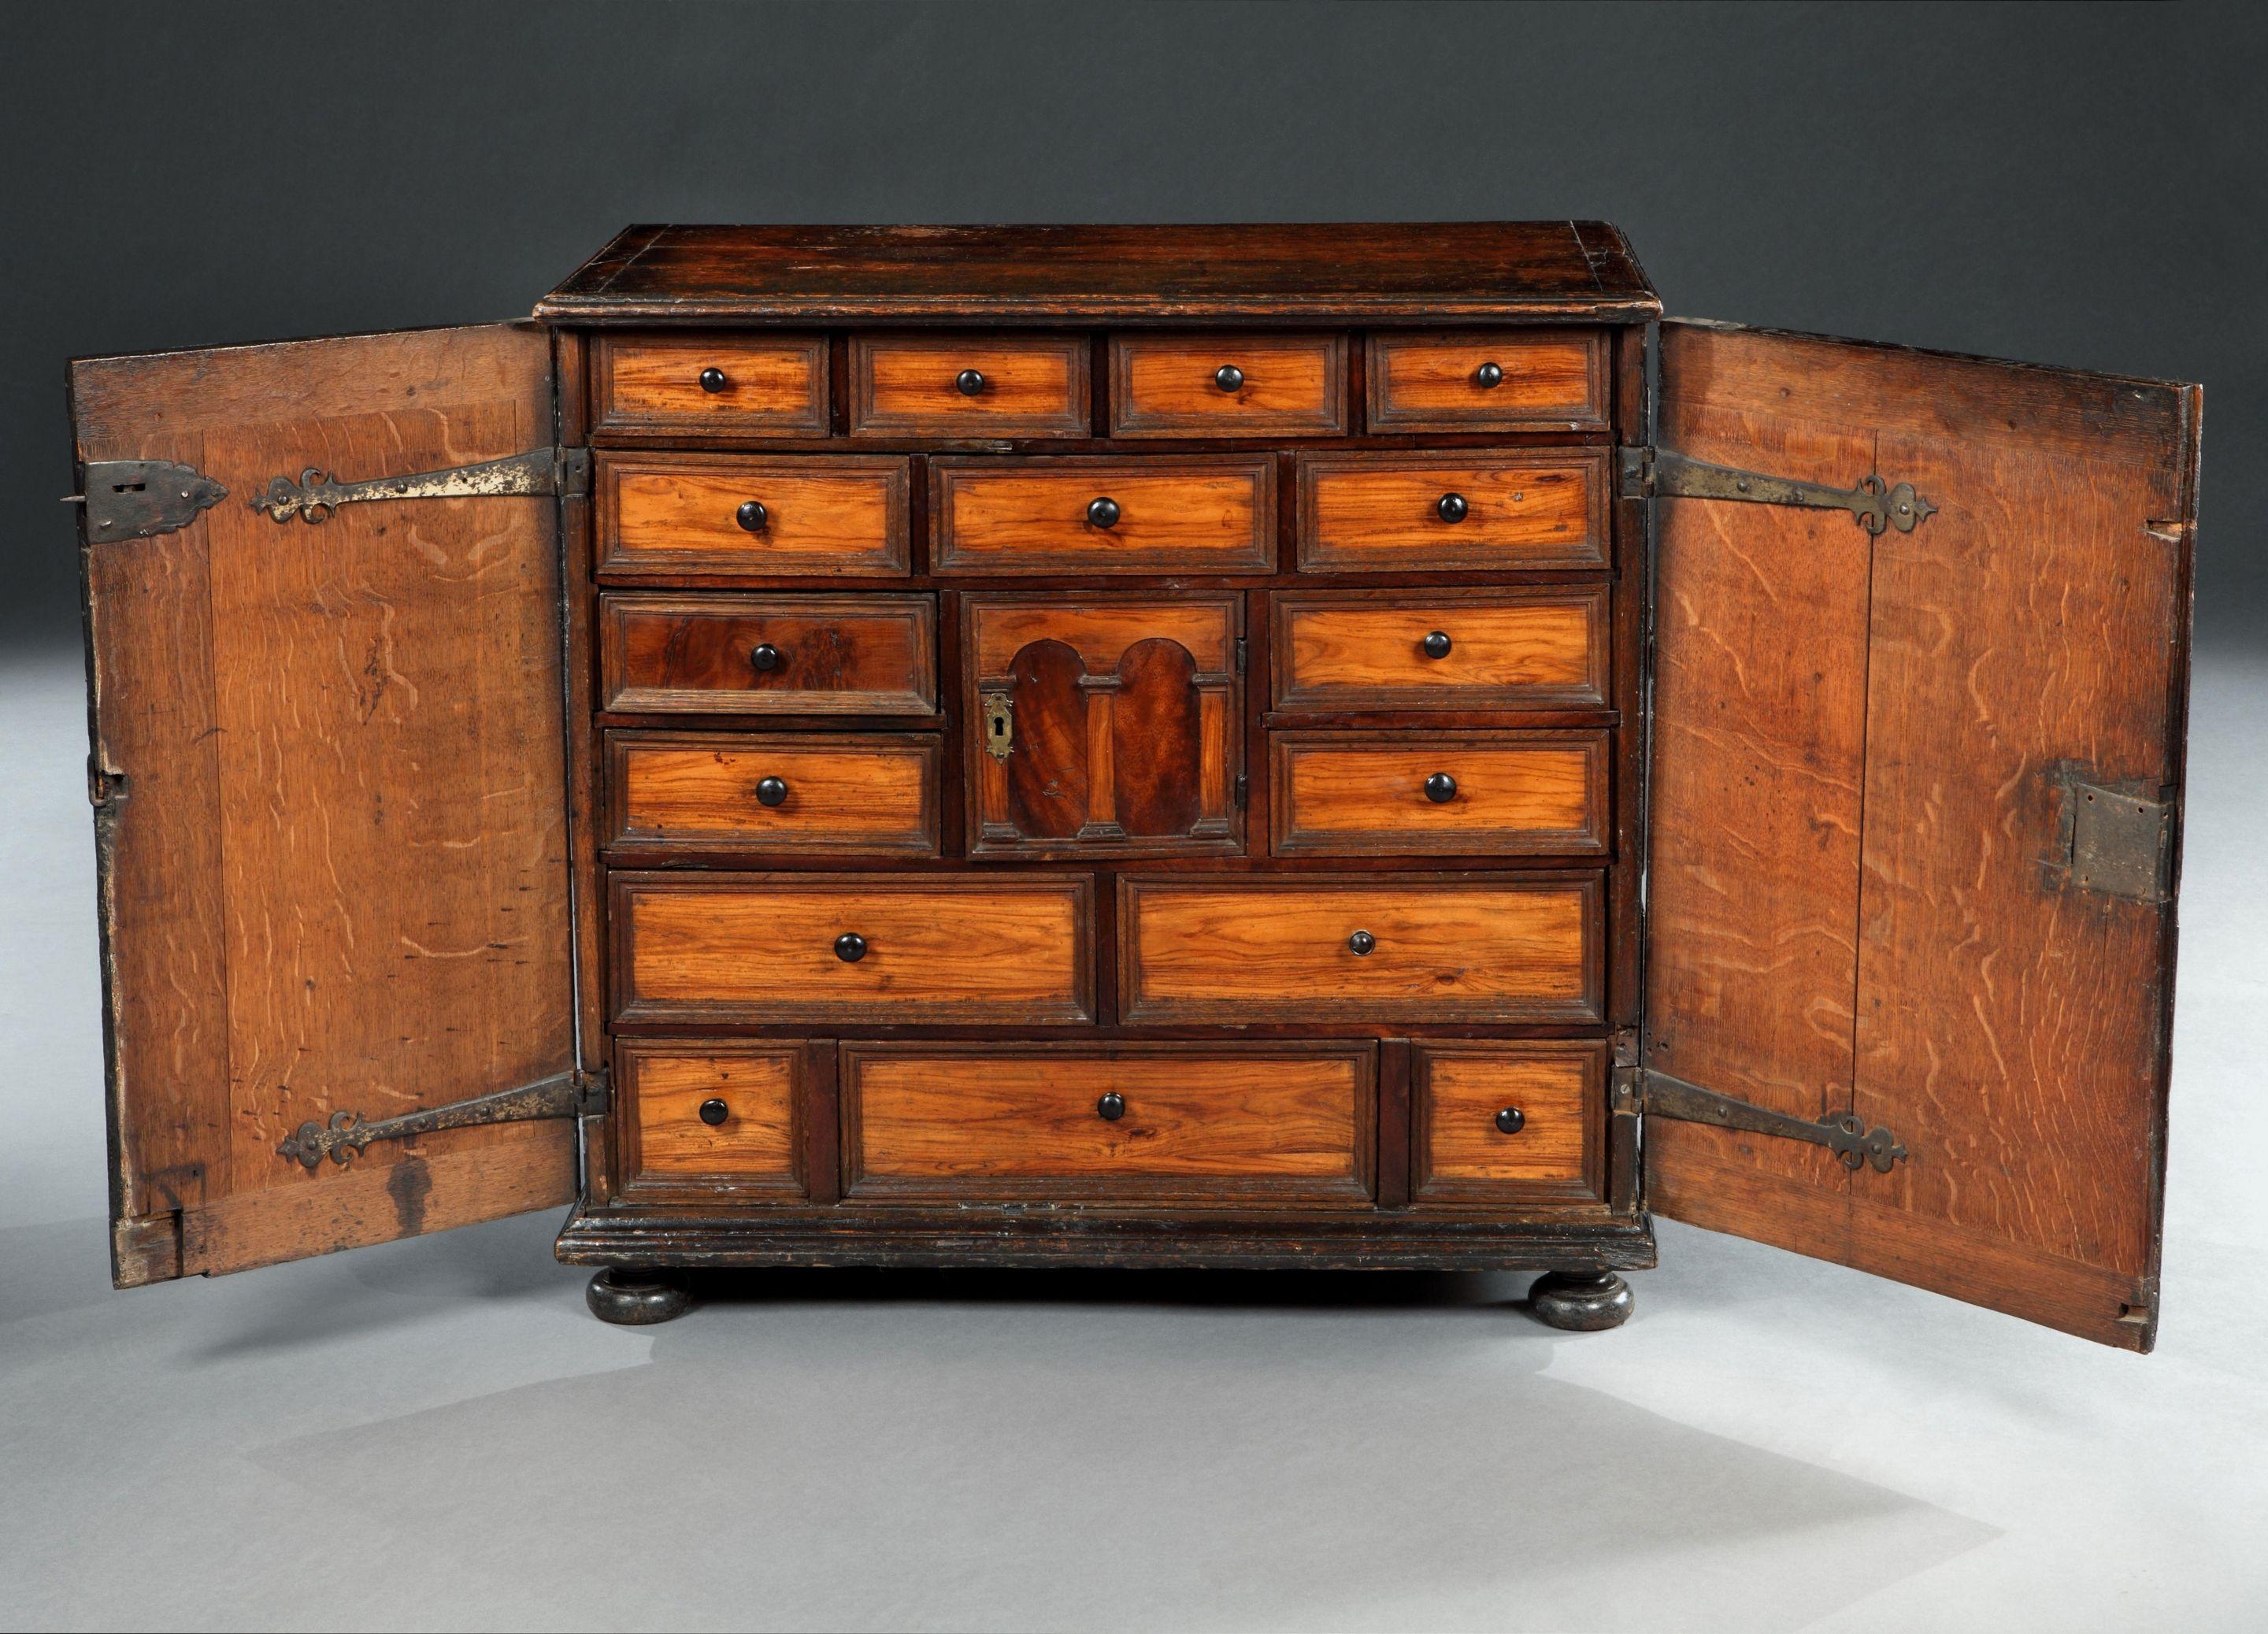 William and Mary Cabinet, 17 Century, Dutch, Baroque, Oak, Teak Cabinet, Secret drawers